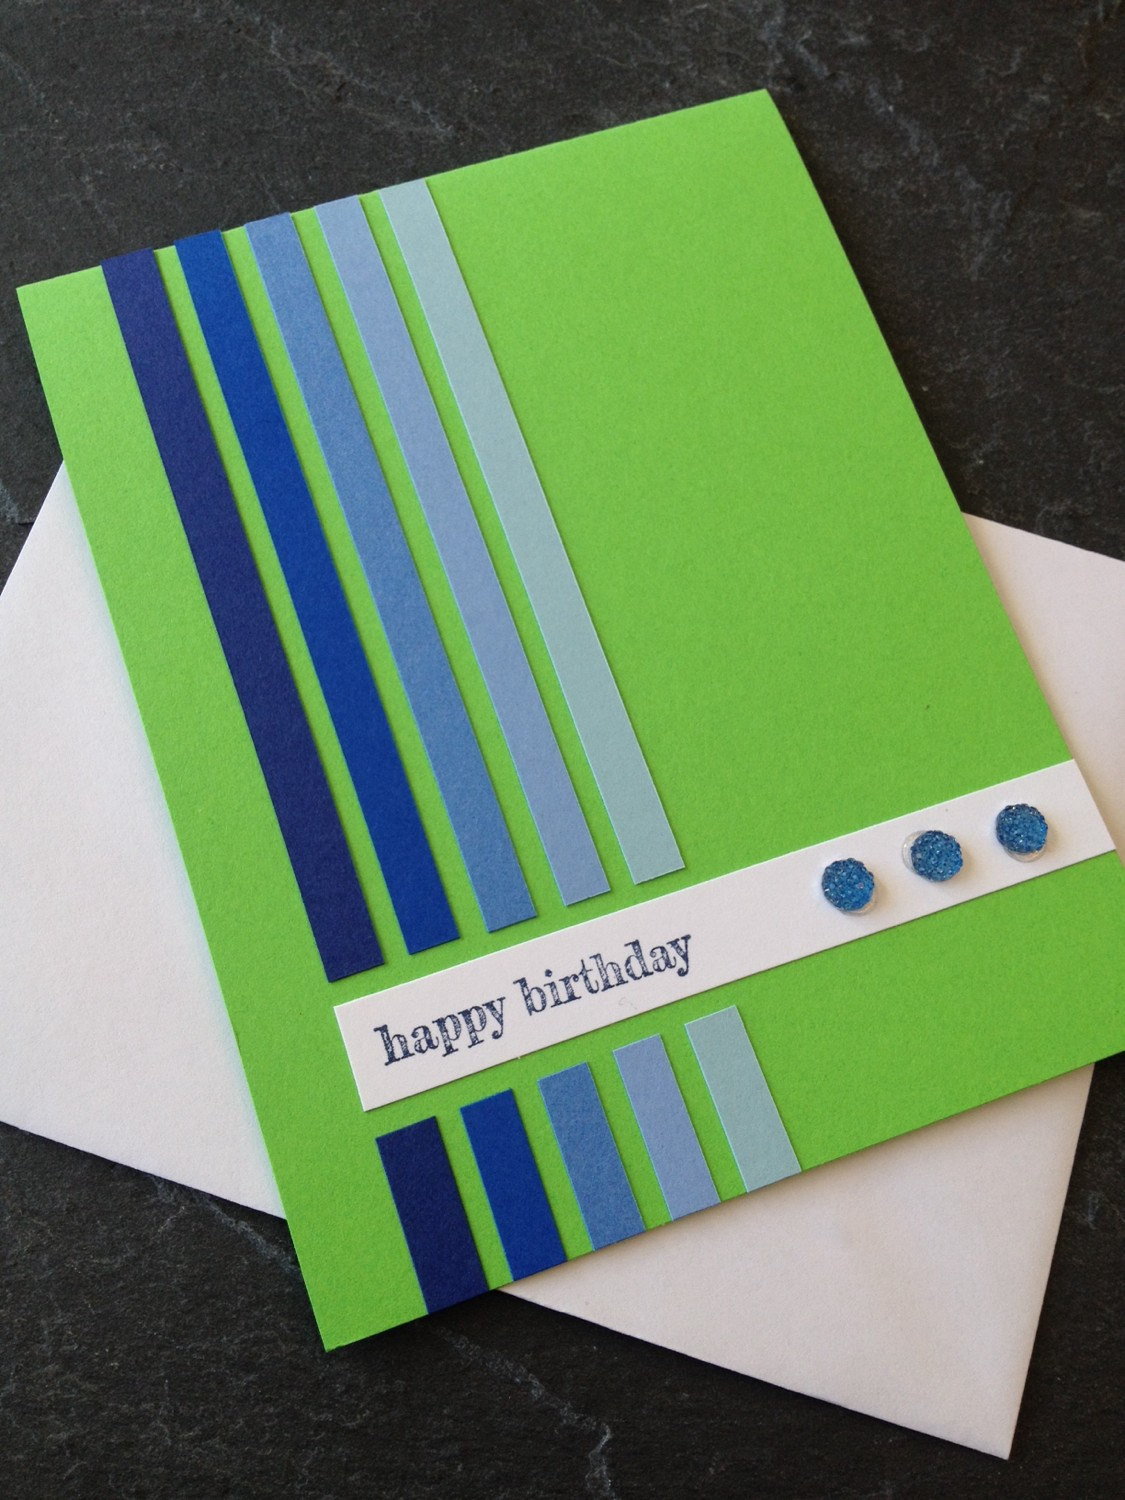 Best ideas about Minimalist Birthday Card
. Save or Pin Minimalist Birthday Card Ombre Birthday Card Minimalist Now.